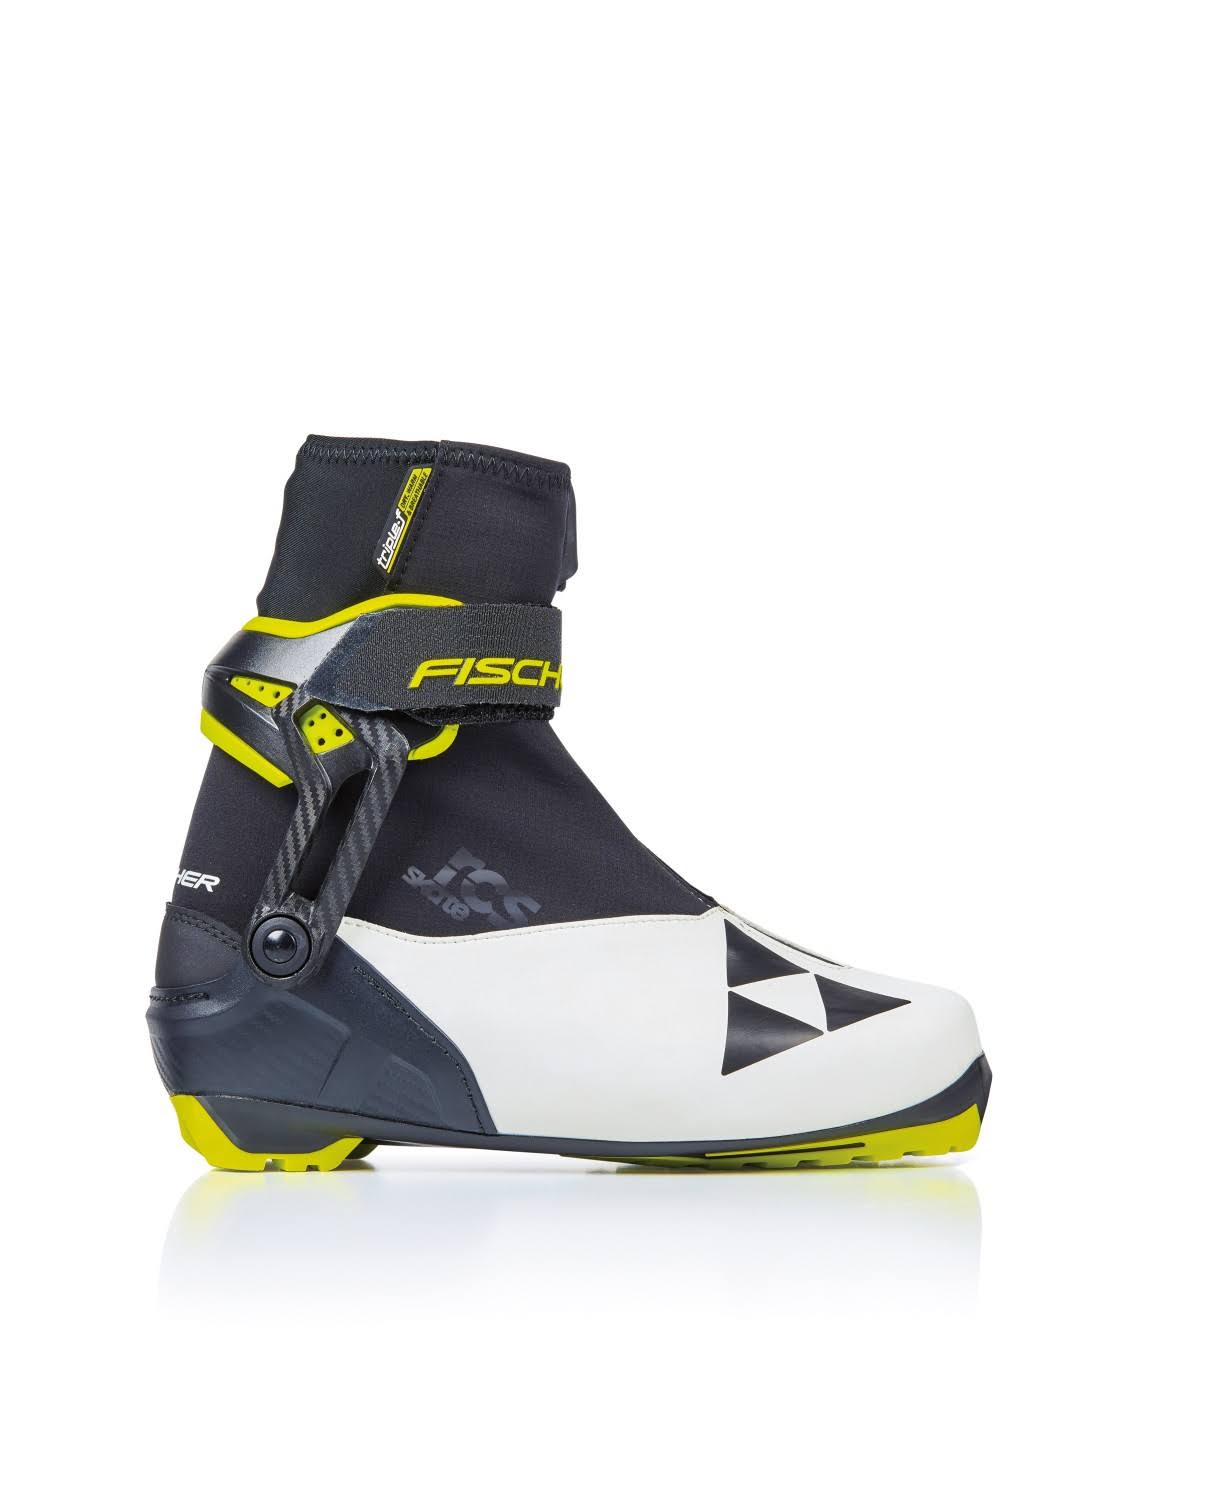 Fischer Rcs Skate Nordic Ski Boots EU 42